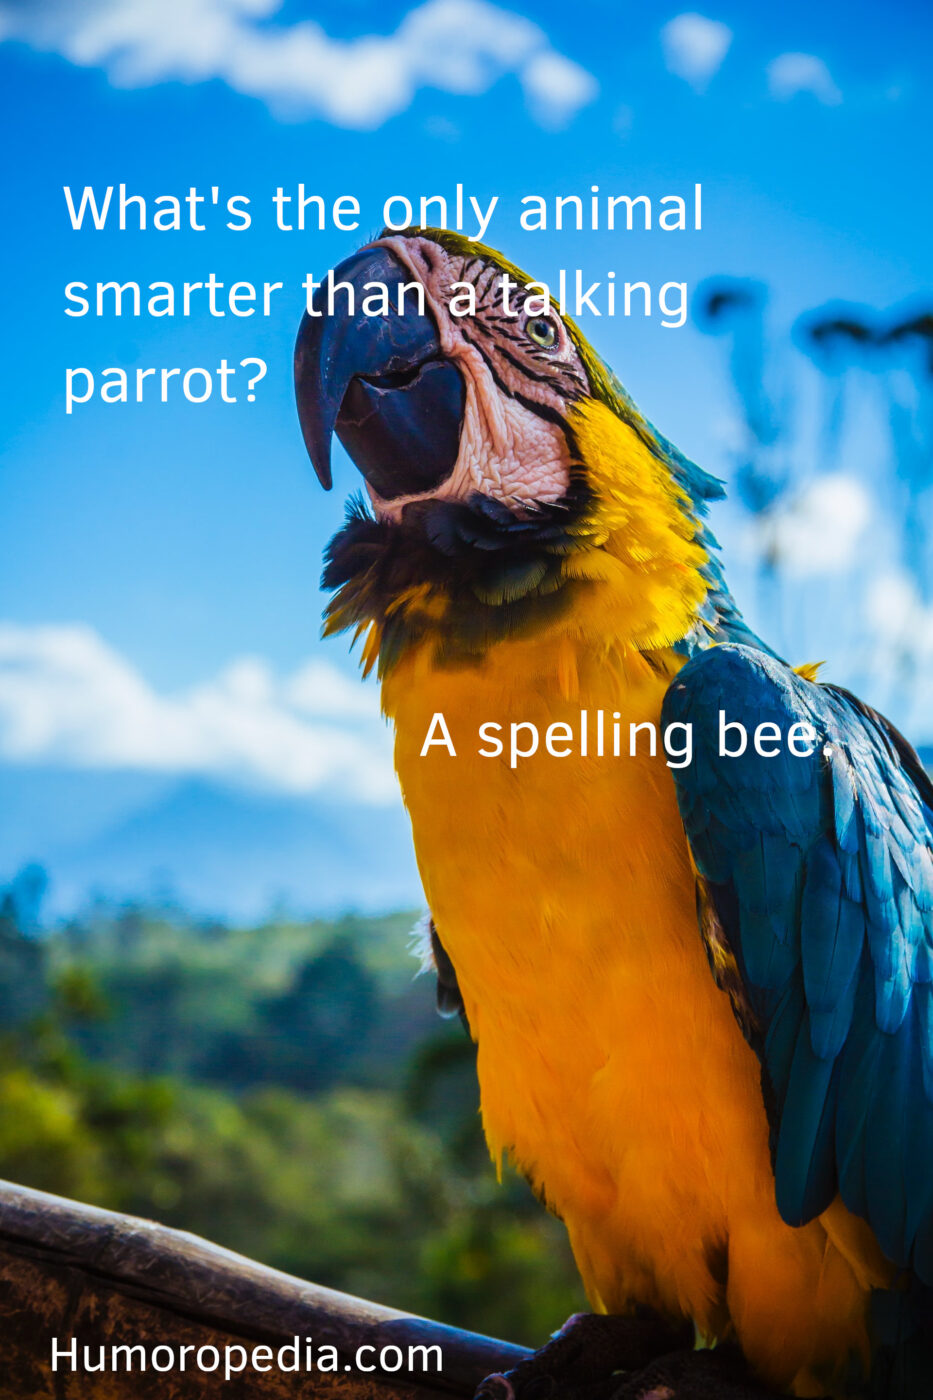 parrot joke related to spelling bee